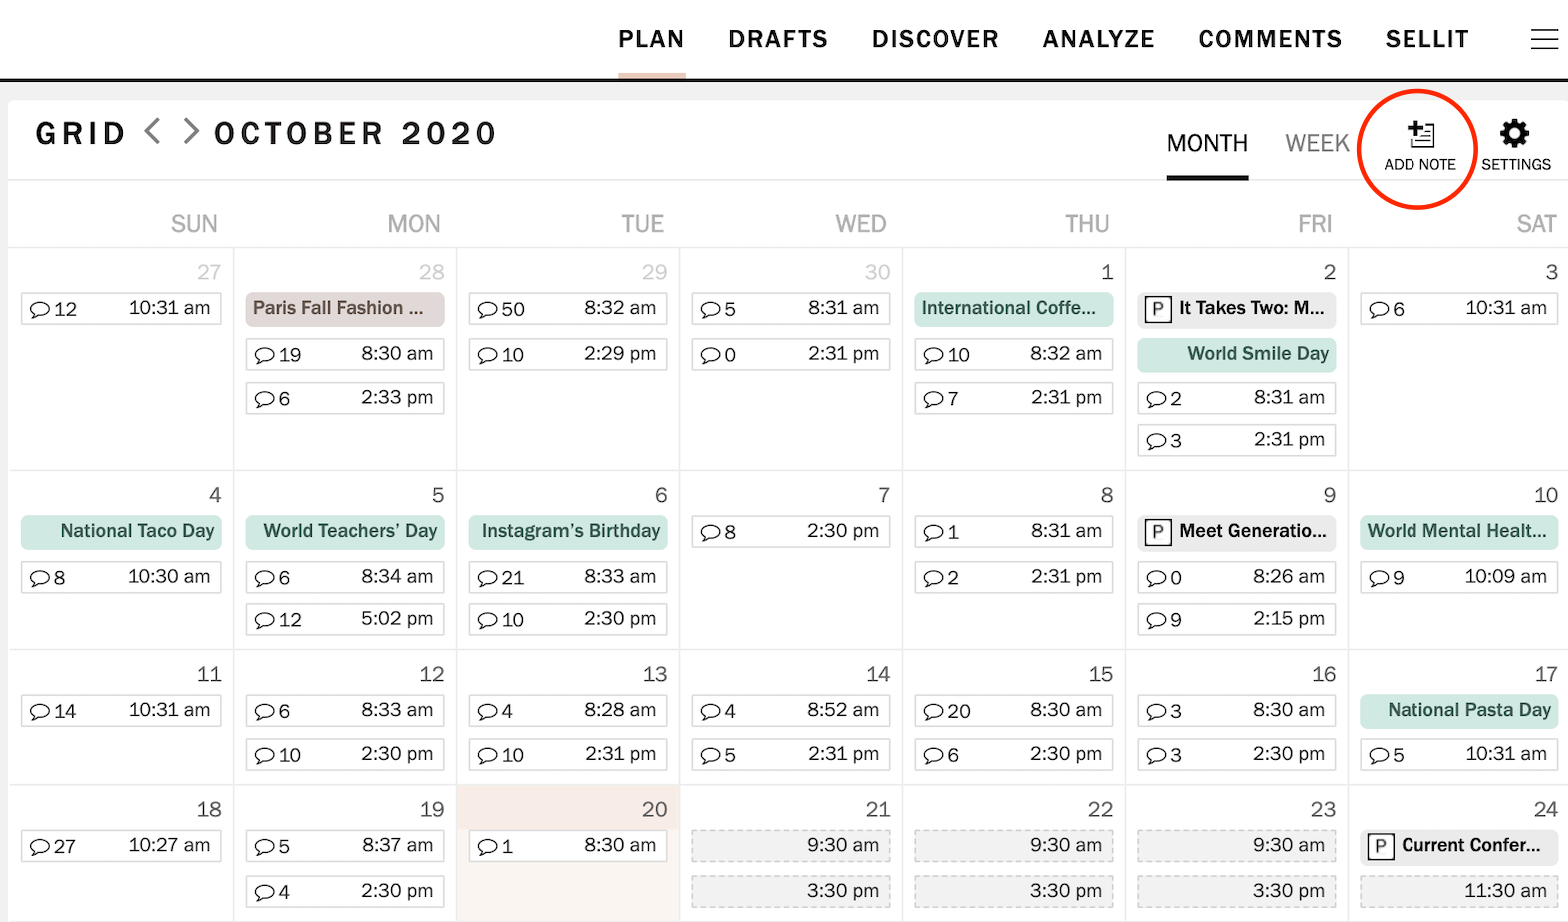 Planning with PLANOLY's Social Calendar & Calendar Notes